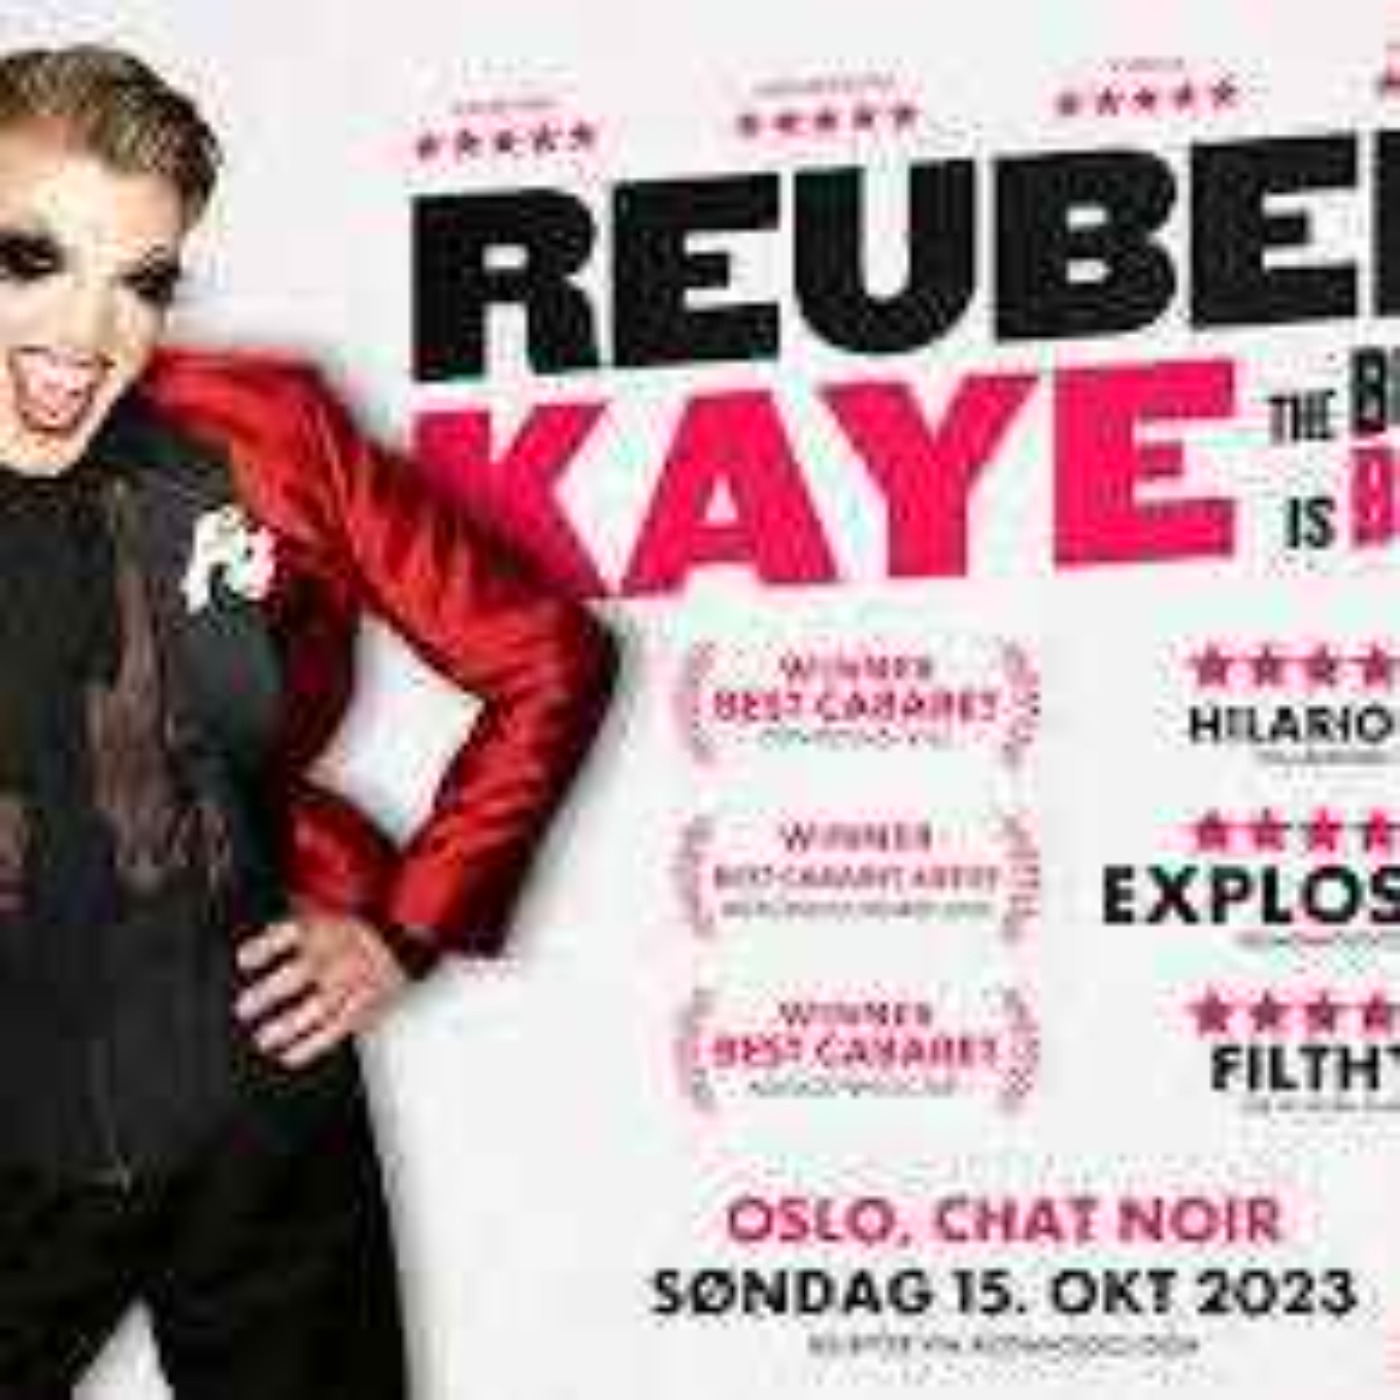 Reuben Kaye - The Butch is Back